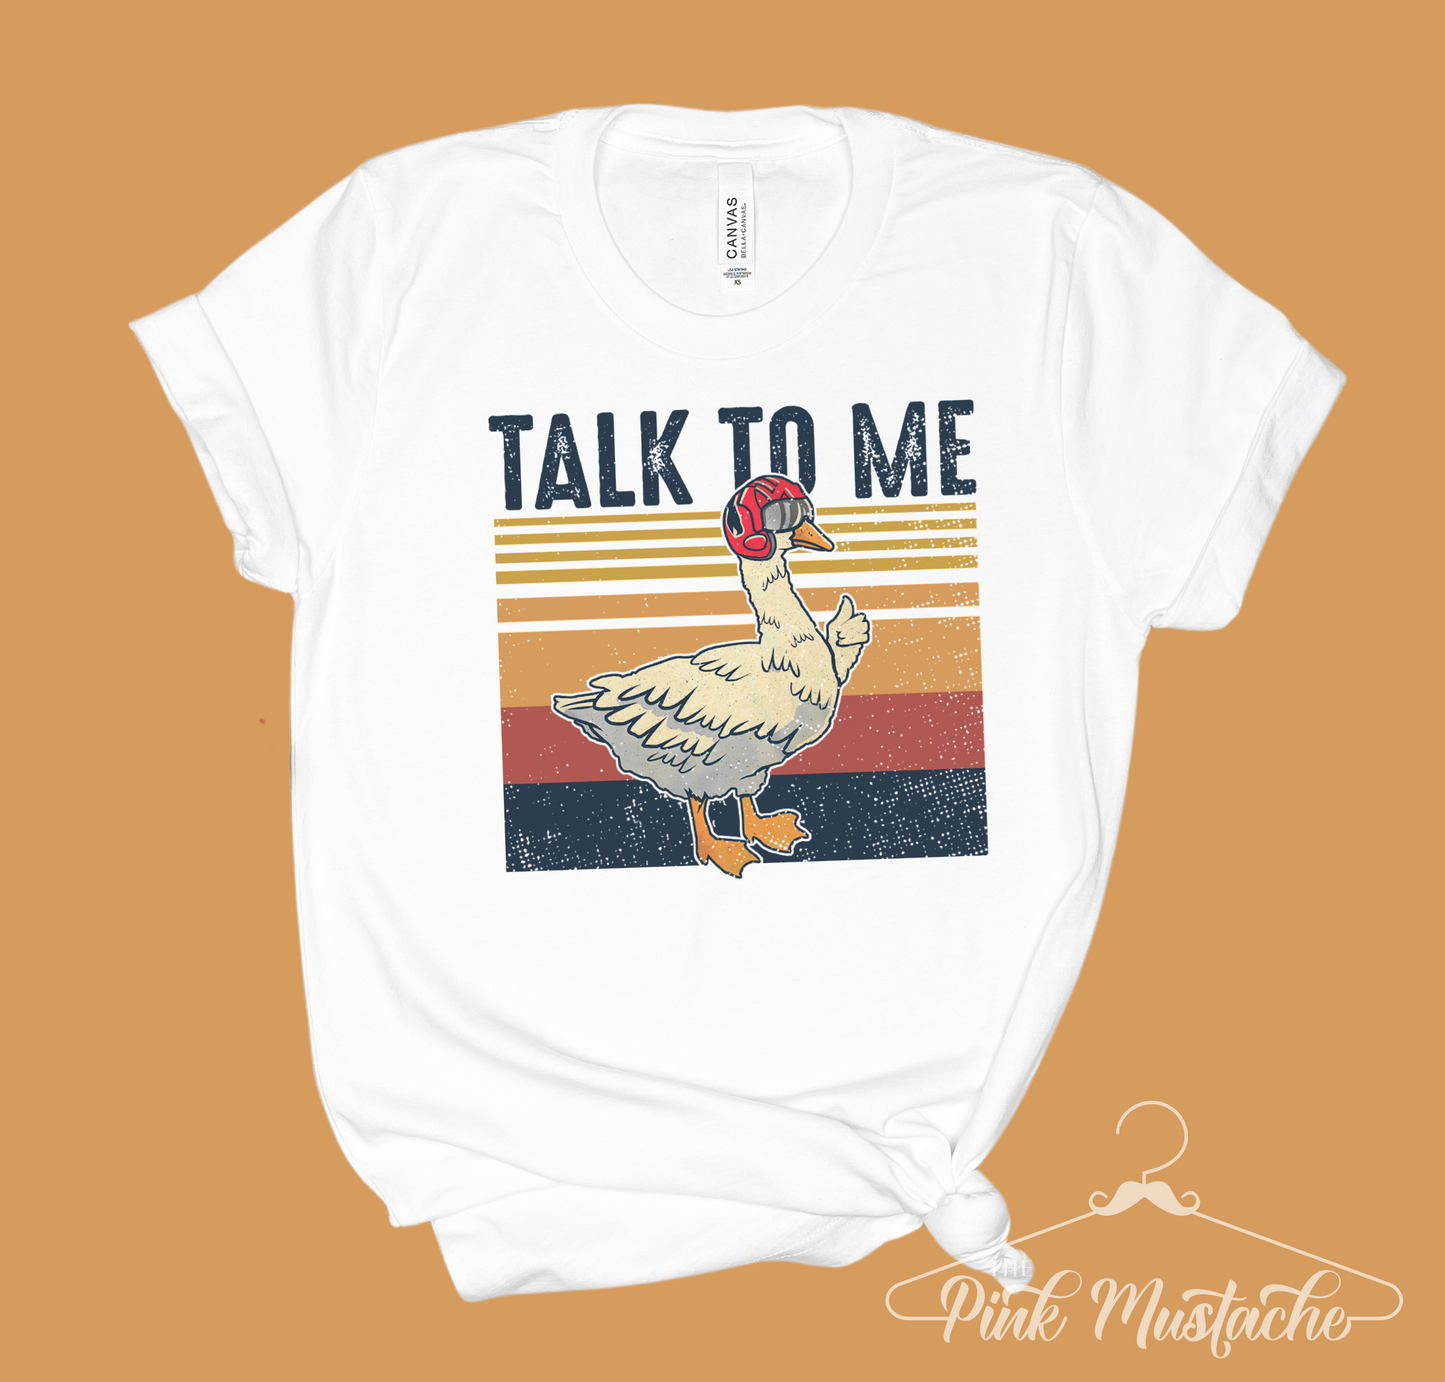 Talk To Me Goose Funny Muscle Tee - Unisex Shirts/ Top Gun Inspired Tee/ Maverick Goose / Aviators Tank - Top Gun 2 Inspired